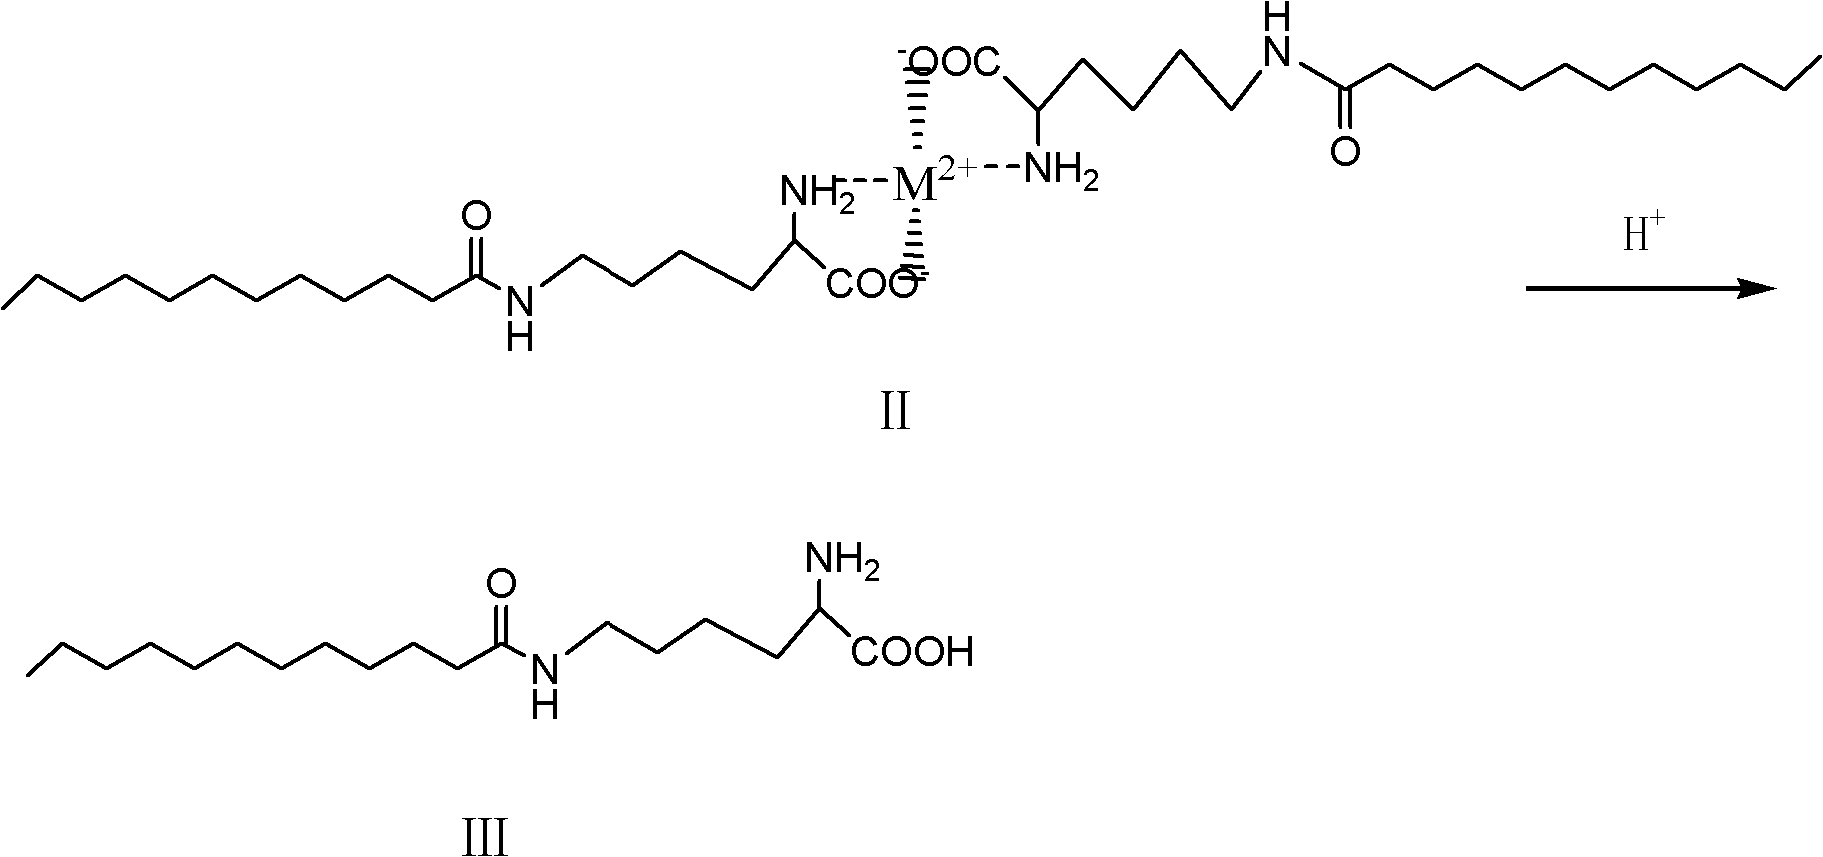 Preparation method of epsilon-N-lauroyl lysine